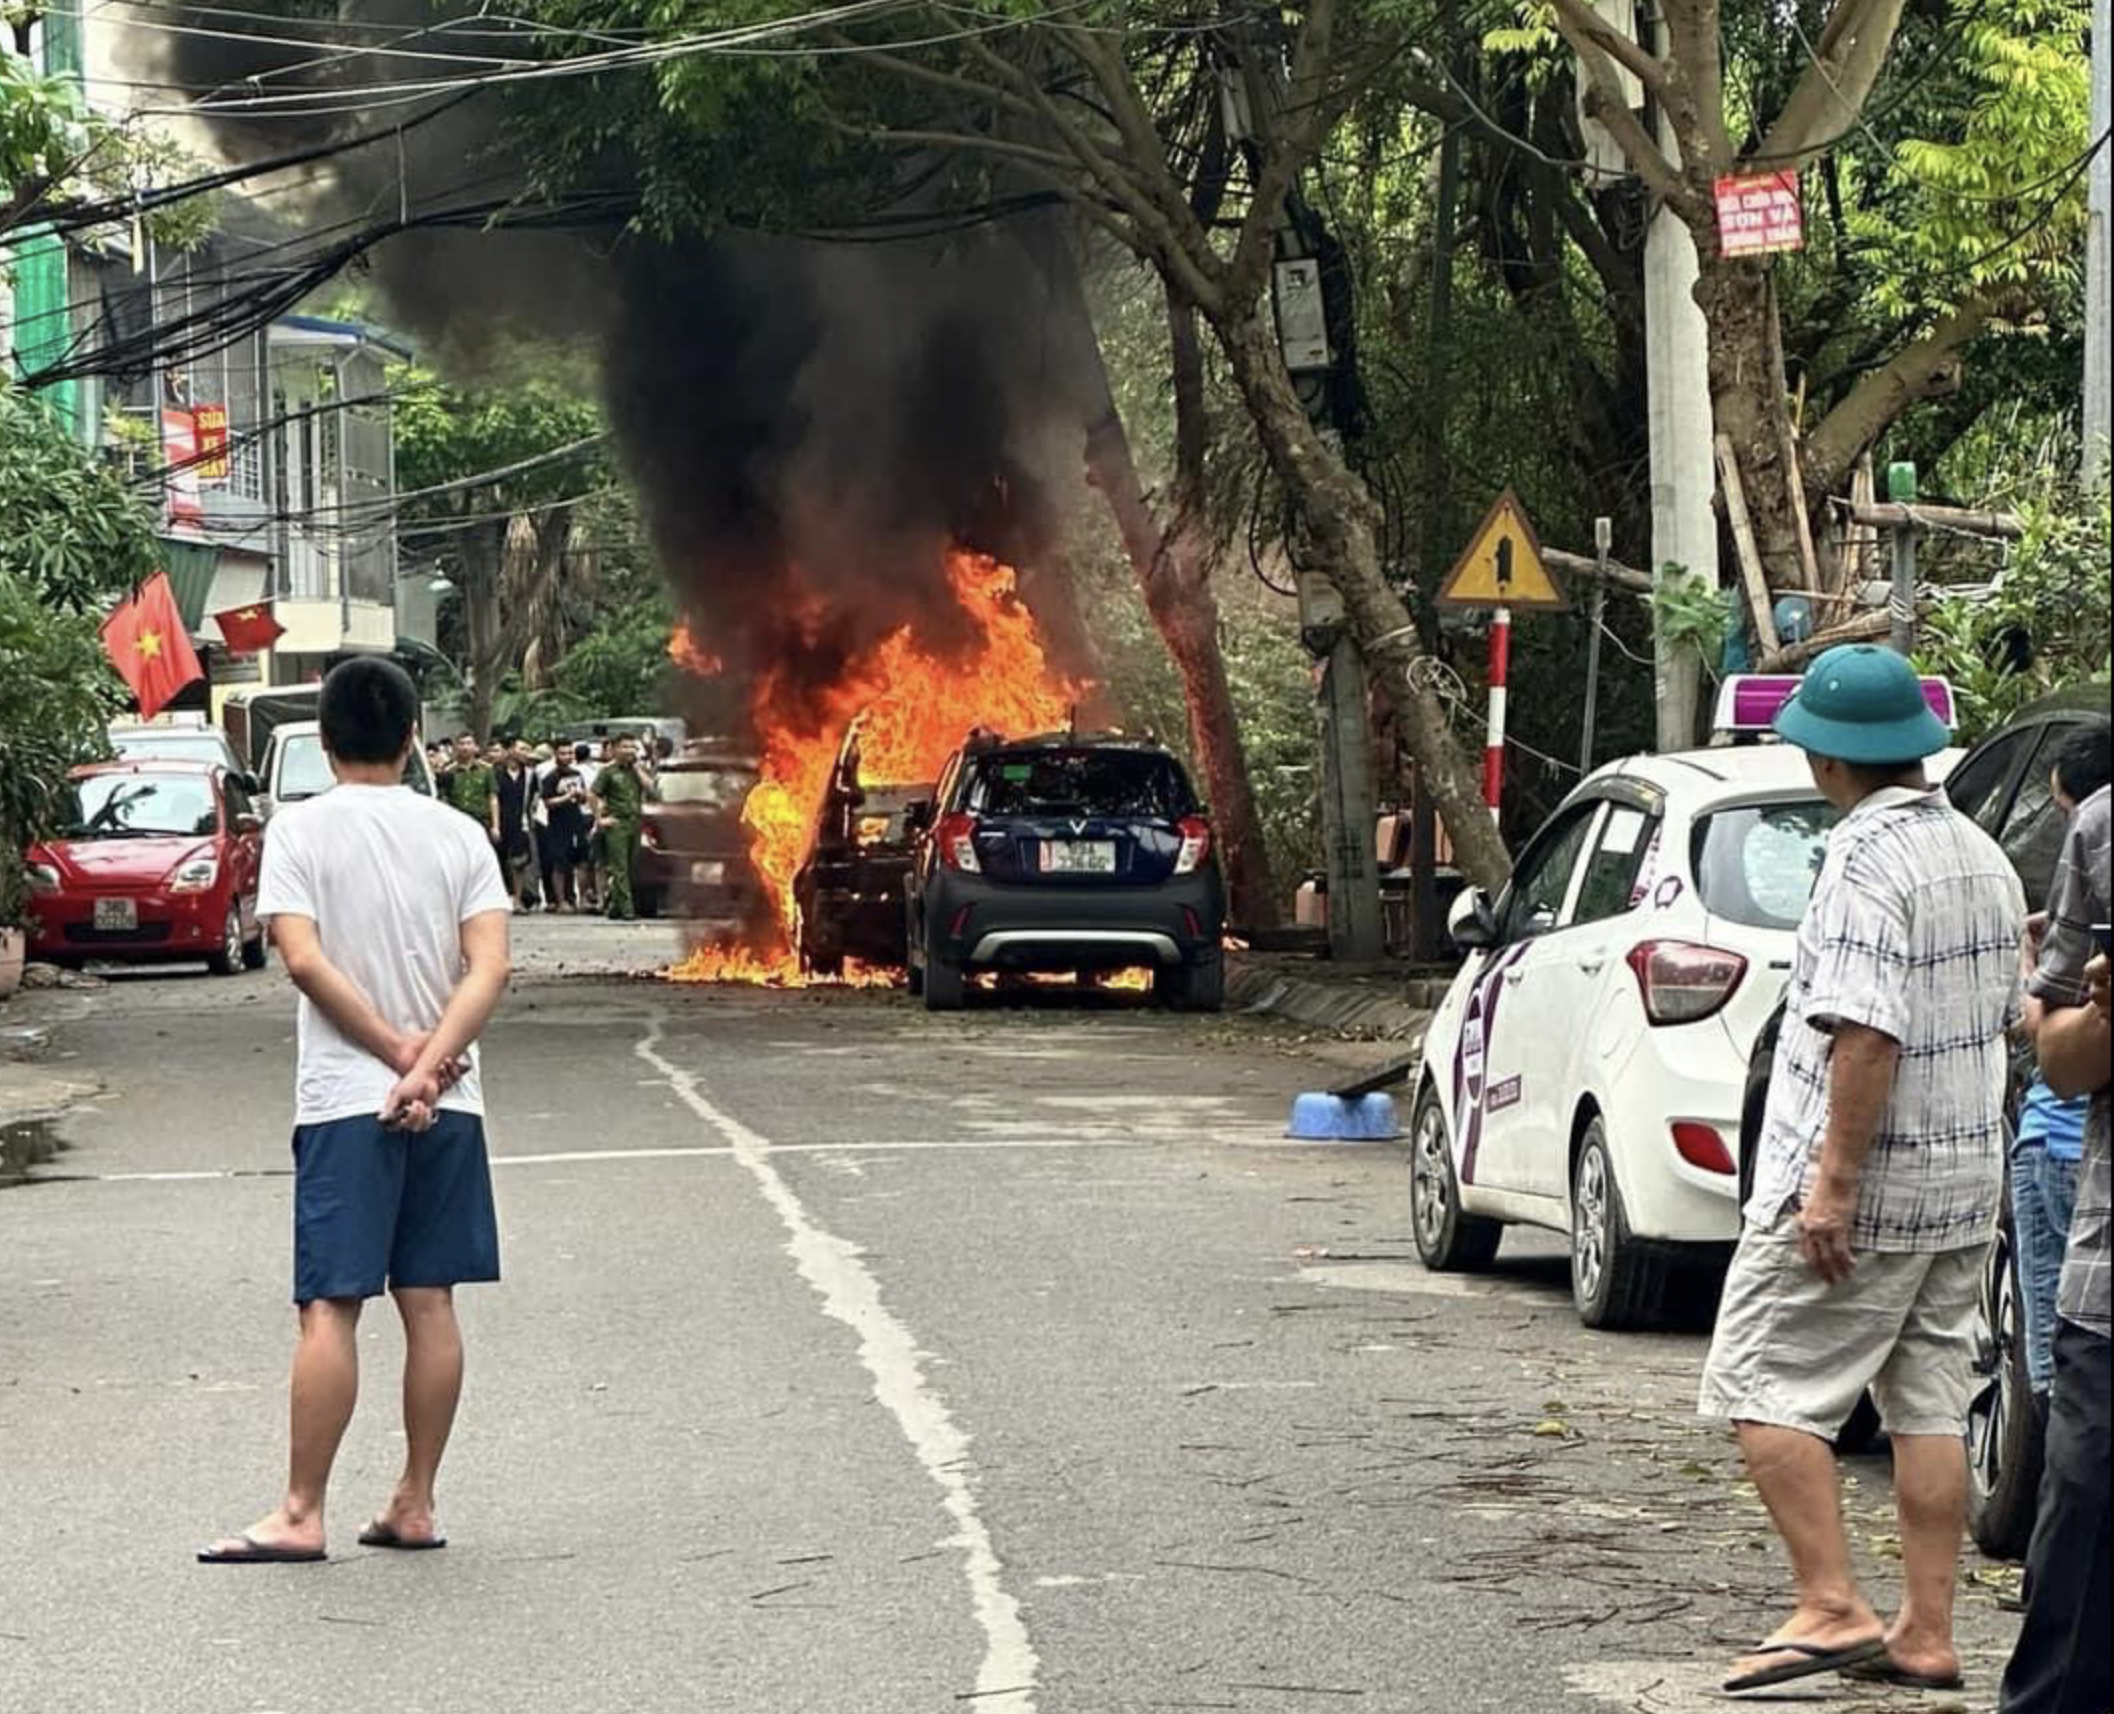 BMW car engulfed in flames in Hanoi